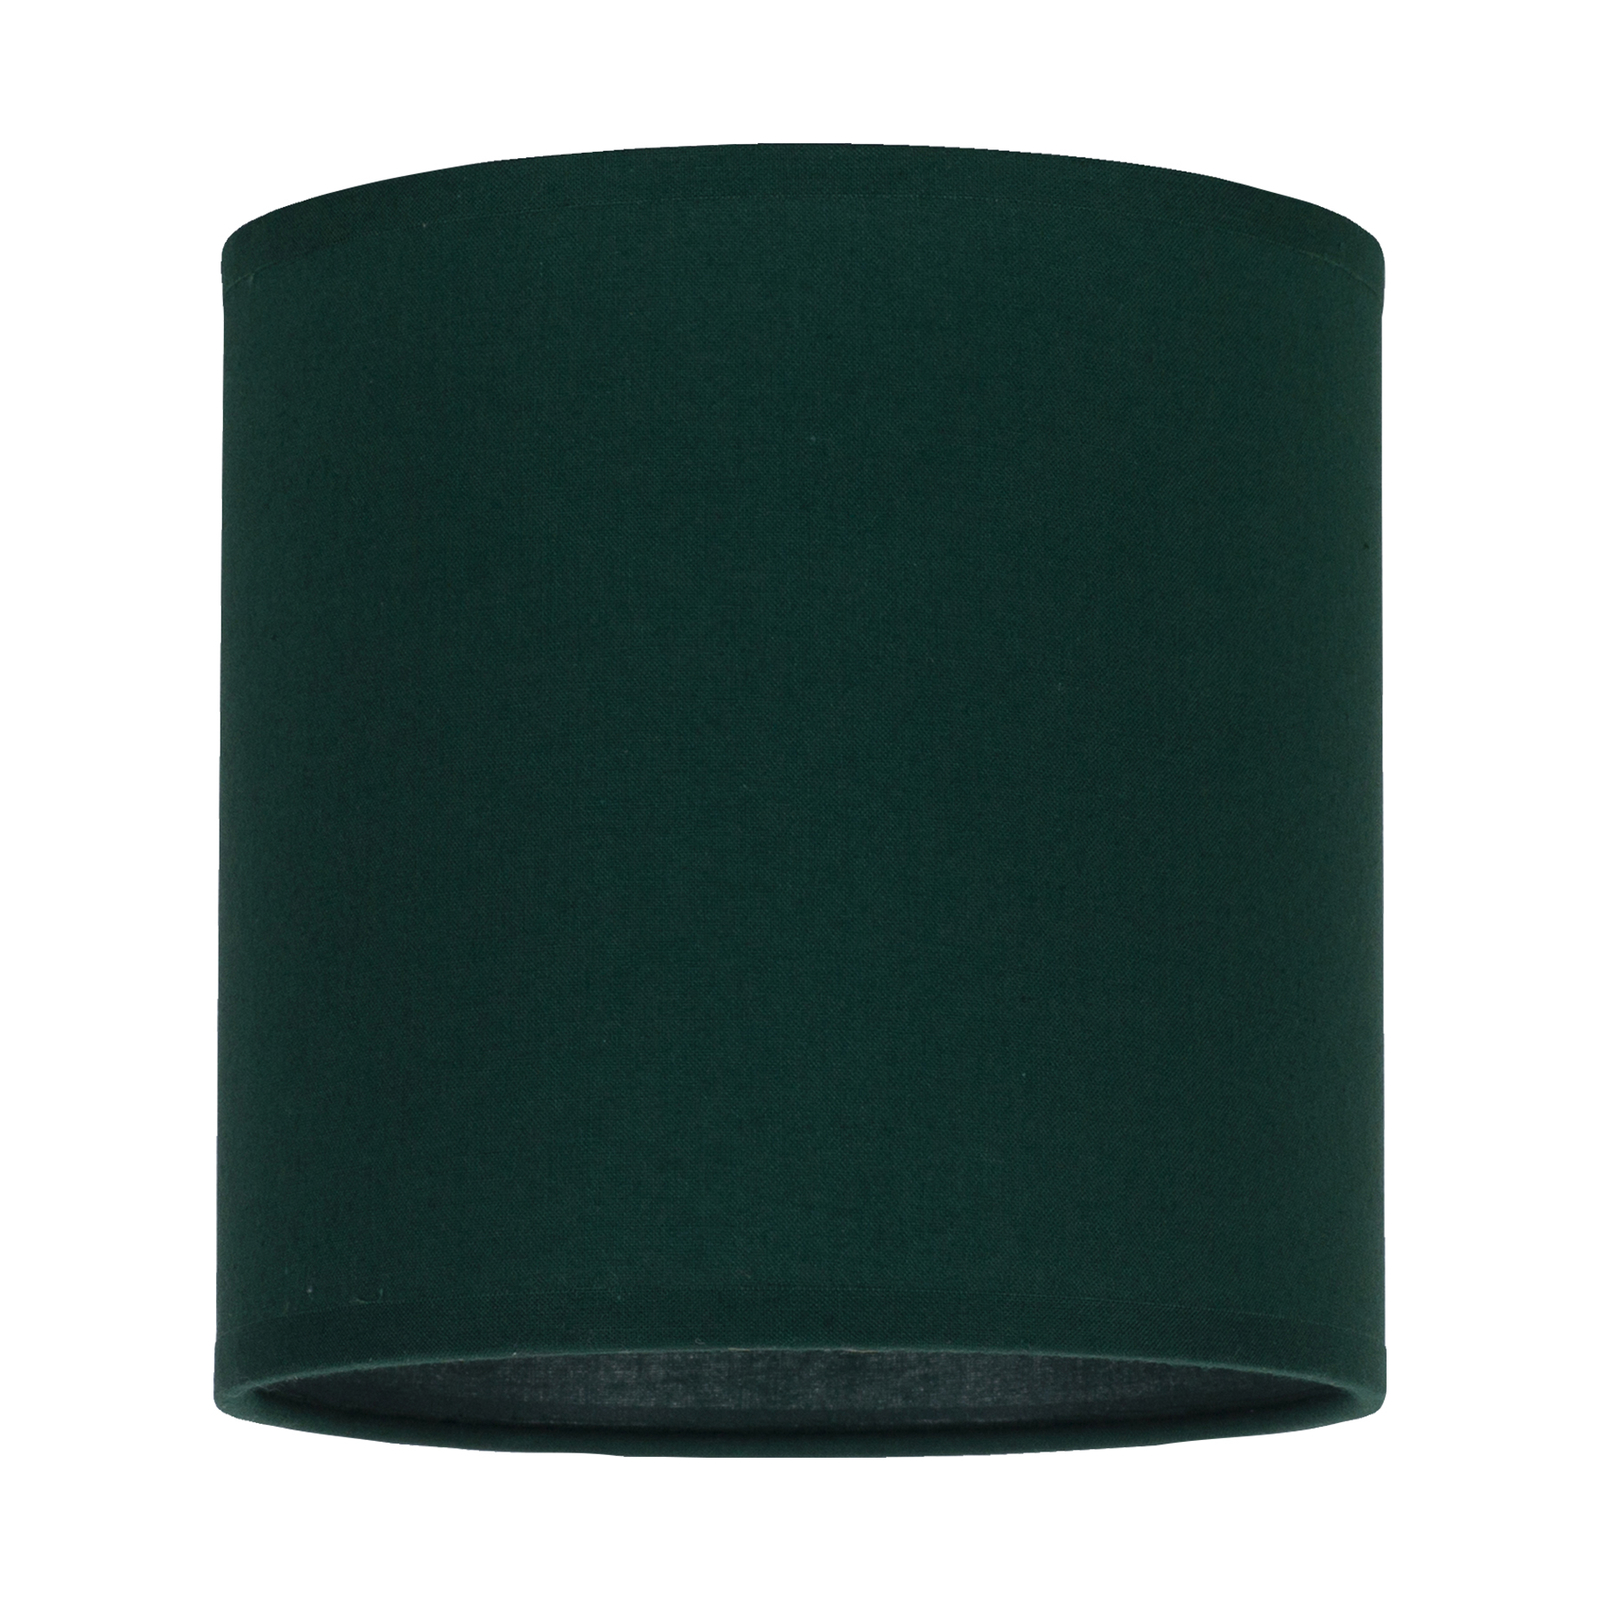 Roller lampshade, green, Ø 15 cm, height 15 cm